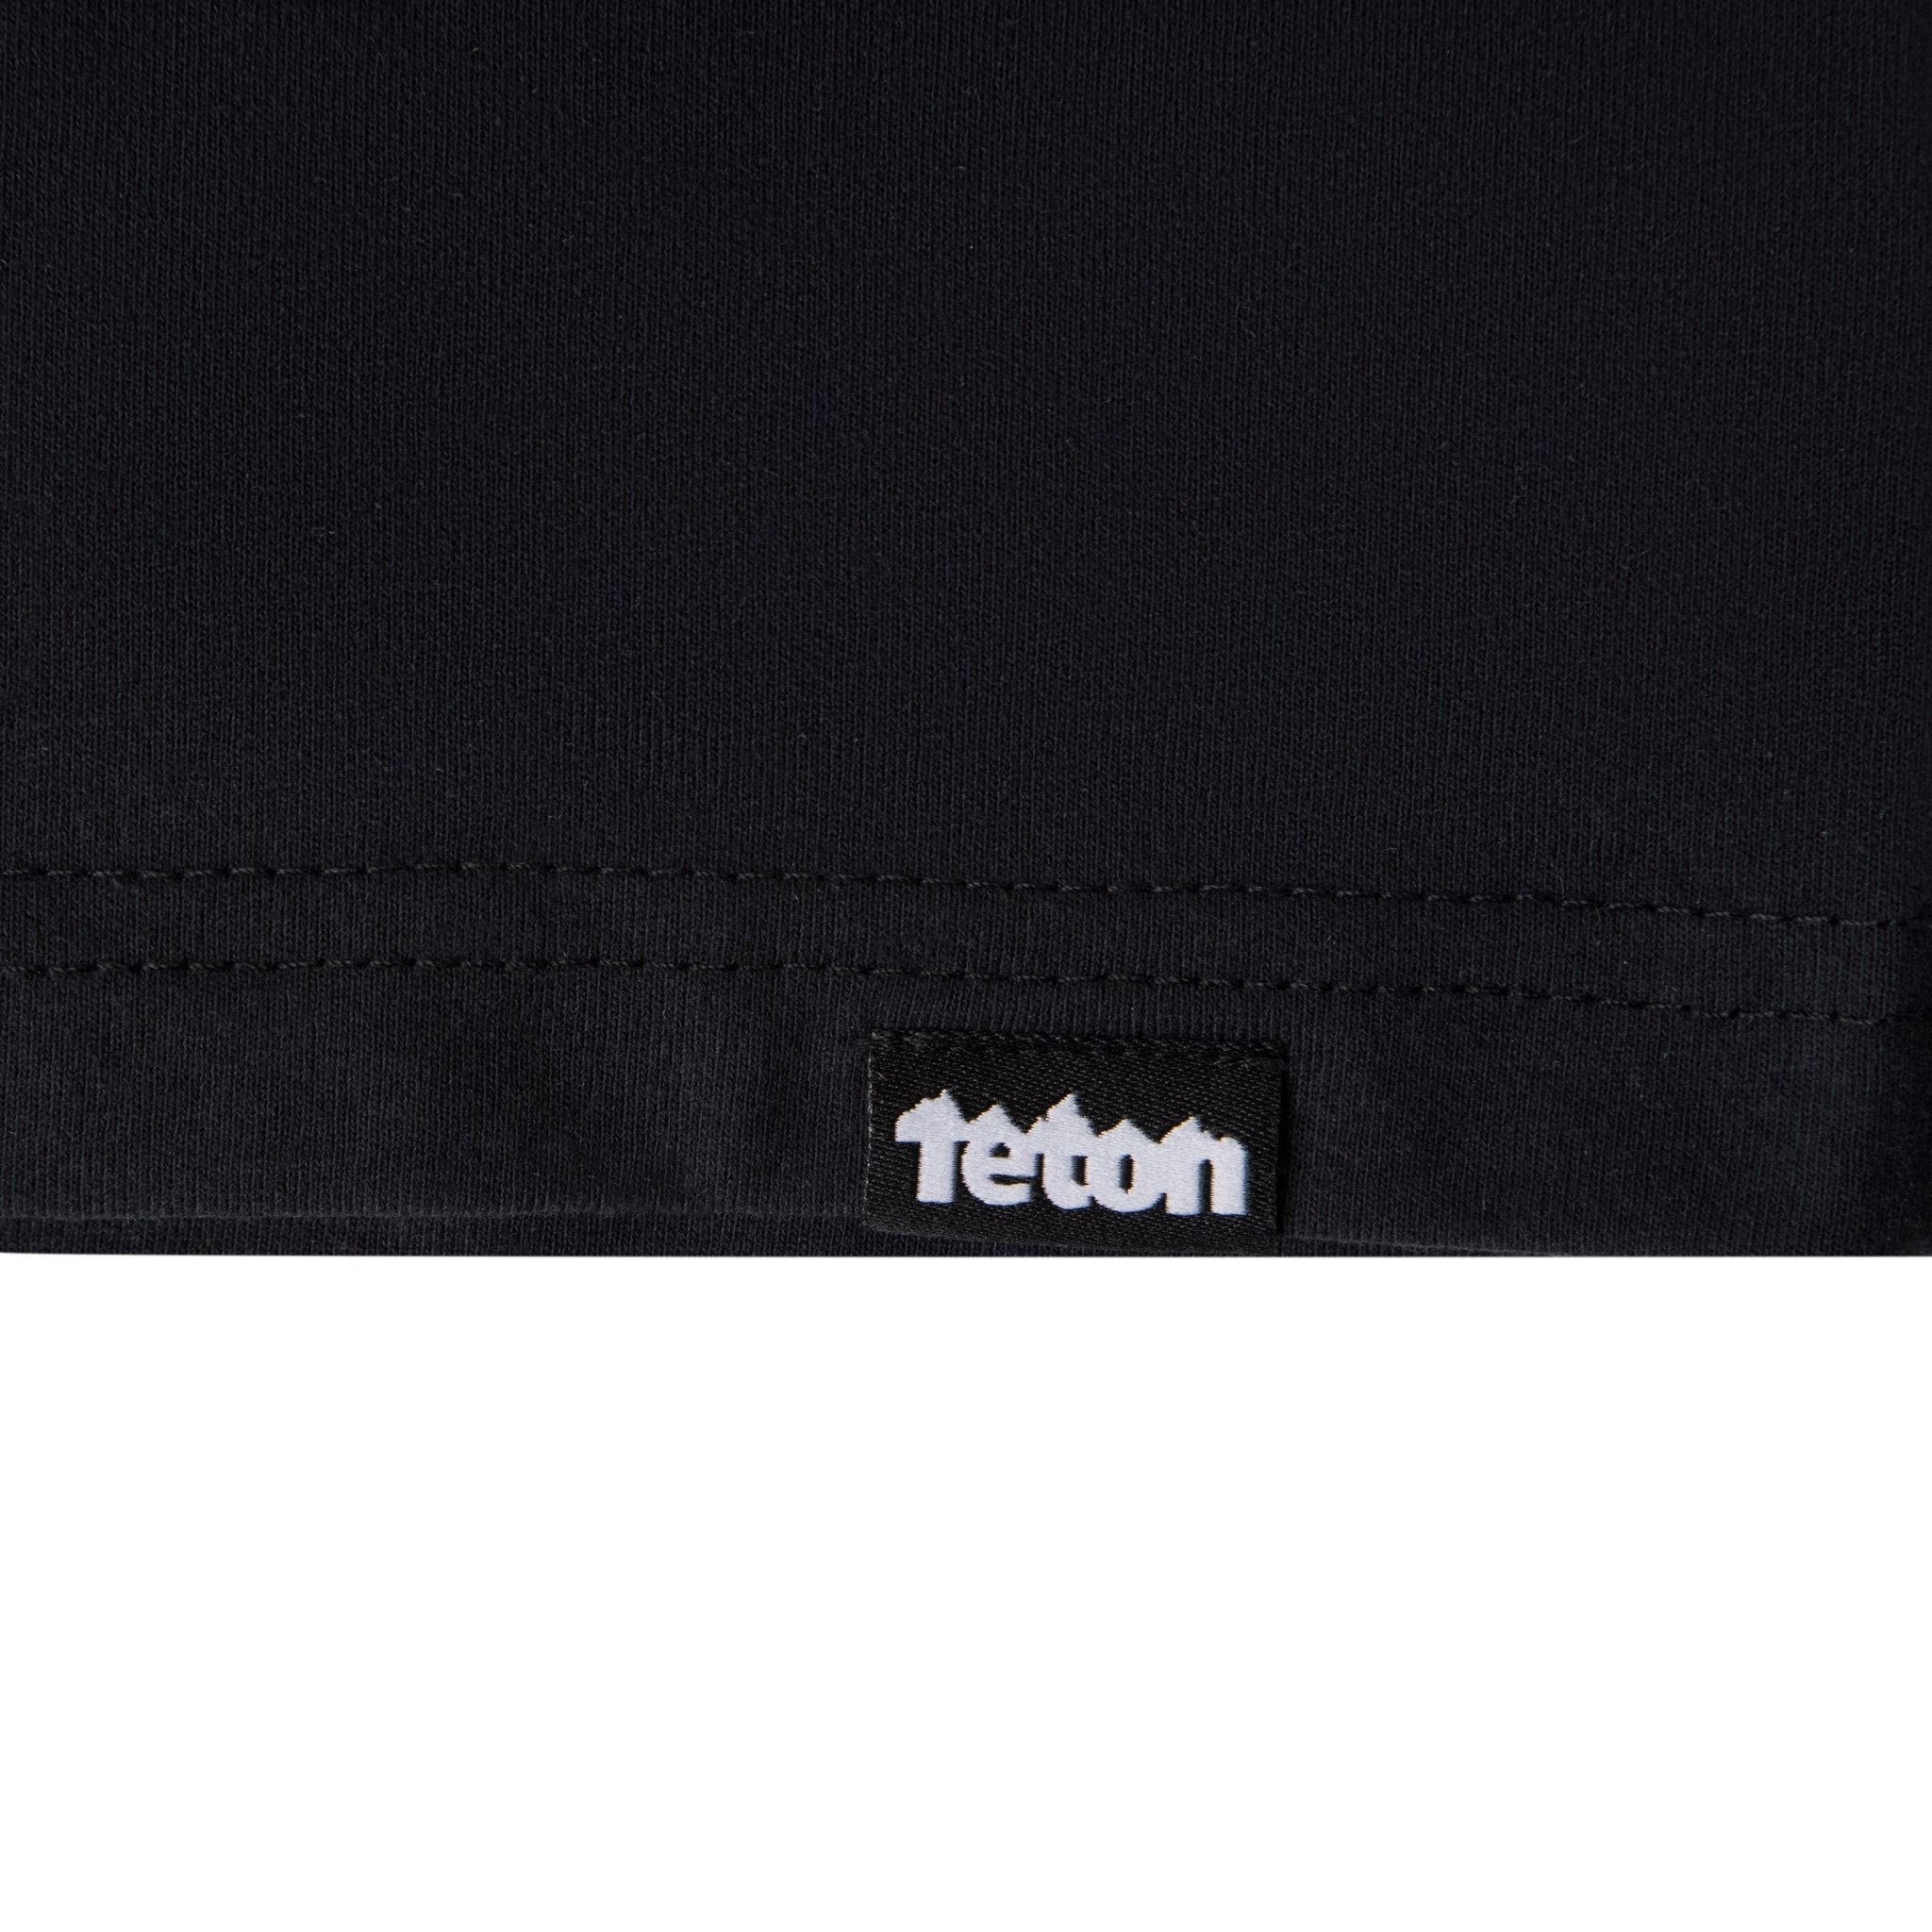 Recycled Teton Concave Tee - Teton Gravity Research